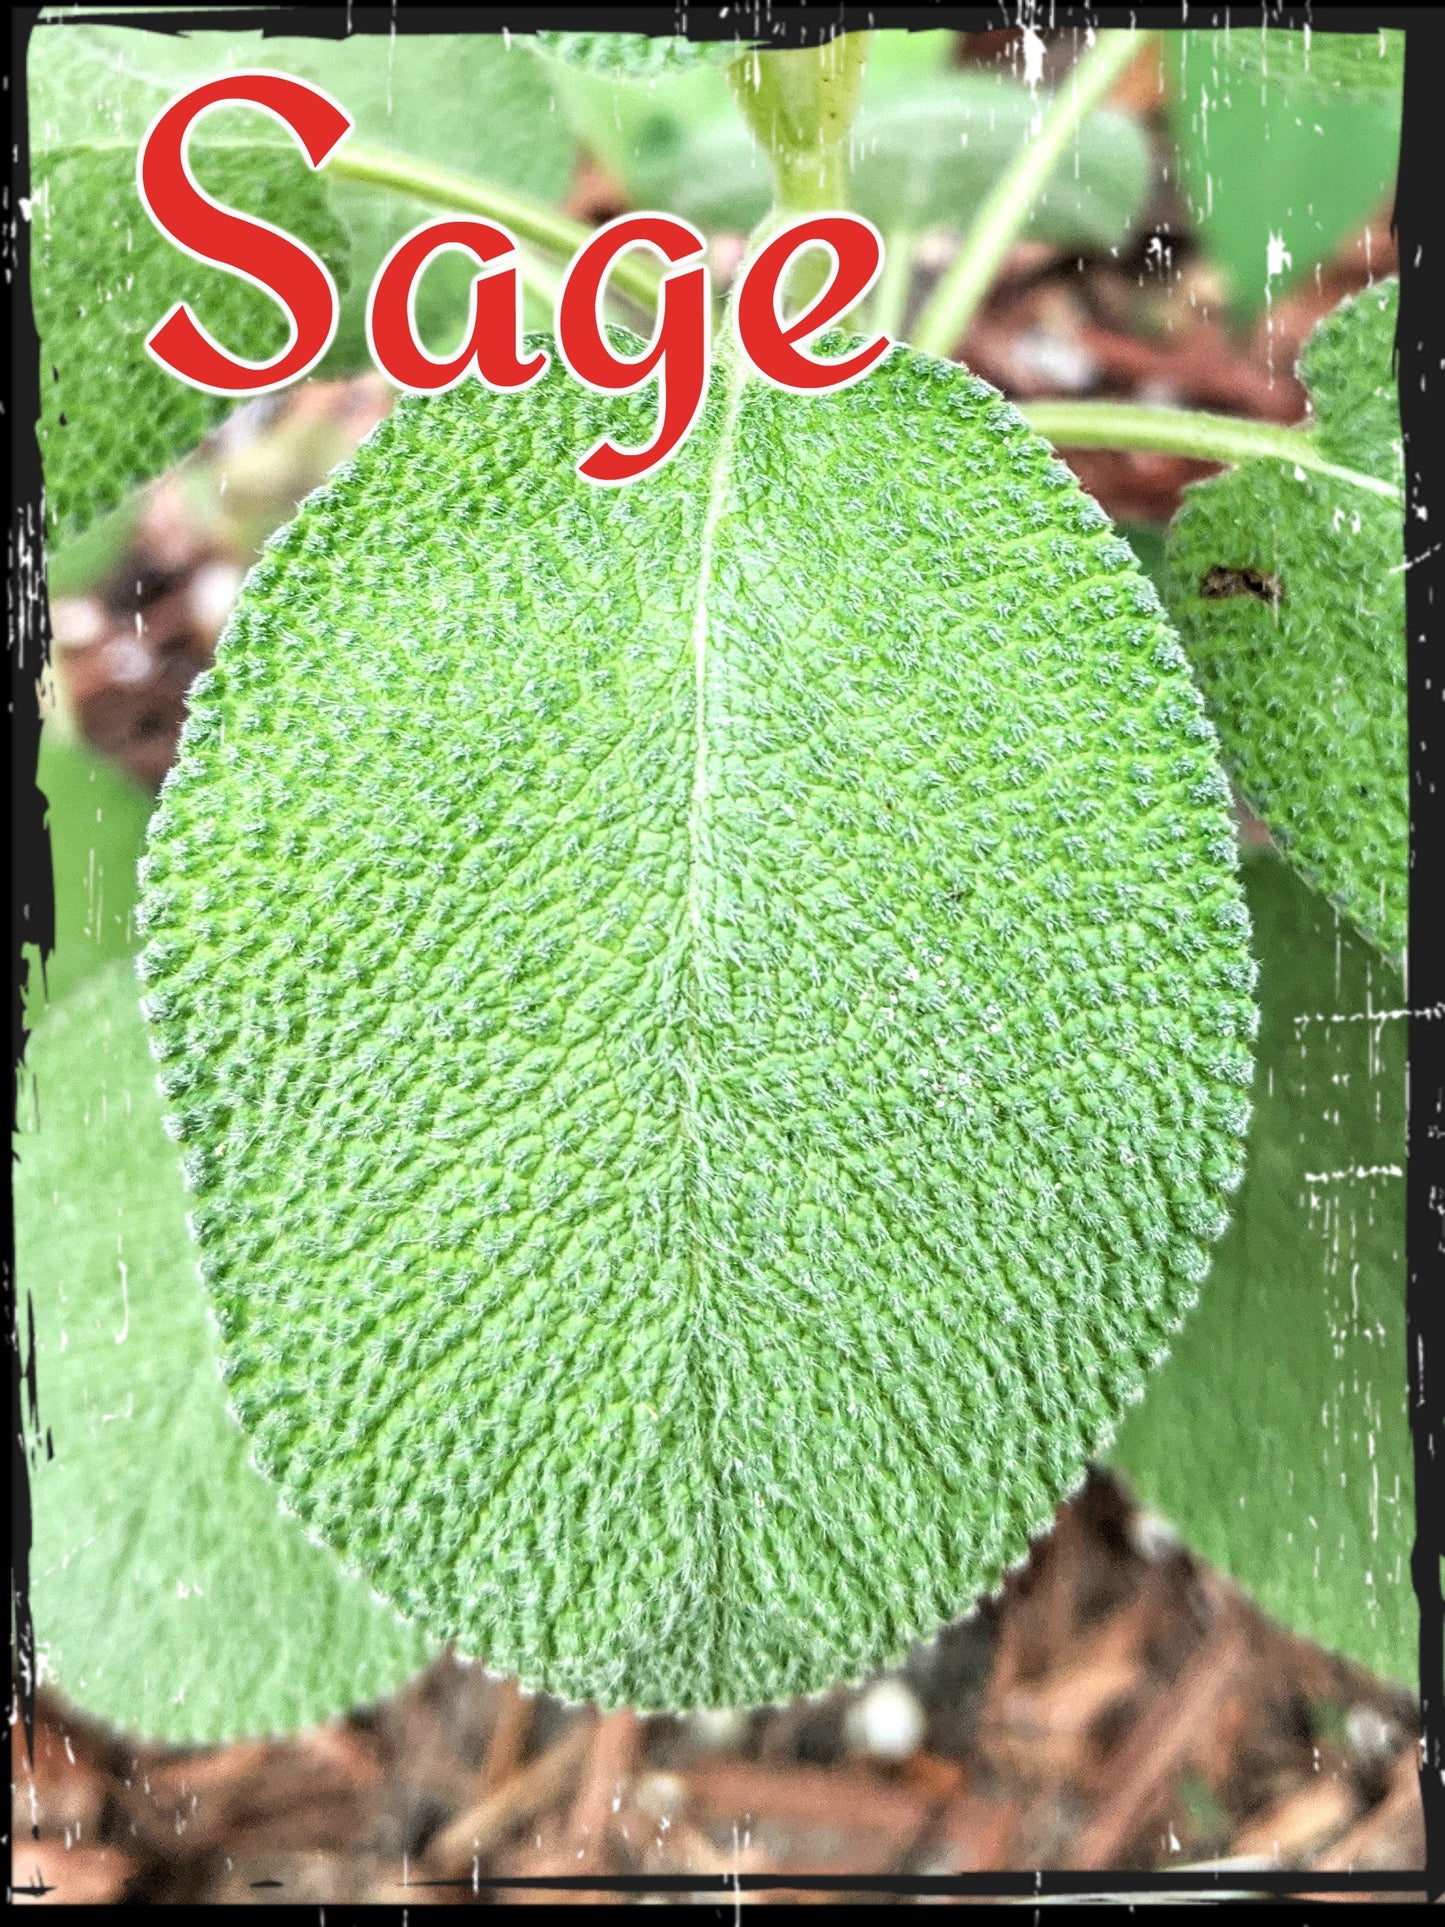 Silver Sage Leaf Earrings, Botanical Eco-Friendly Earrings, Artisan Boho Rustic Nature Inspired Jewelry